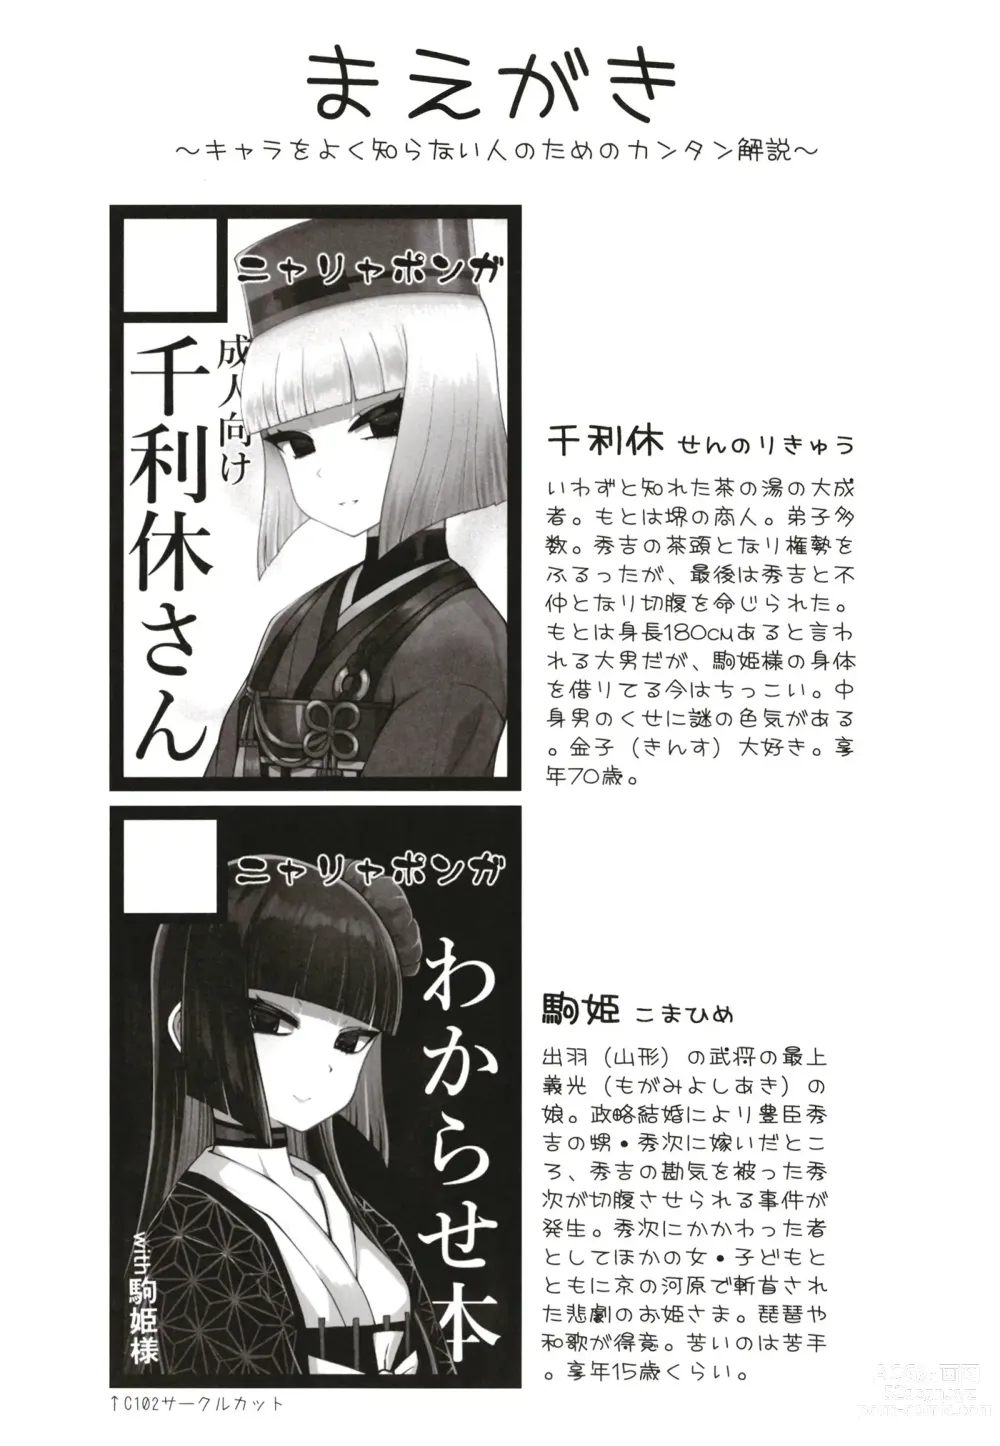 Page 4 of doujinshi Rikyu Hard